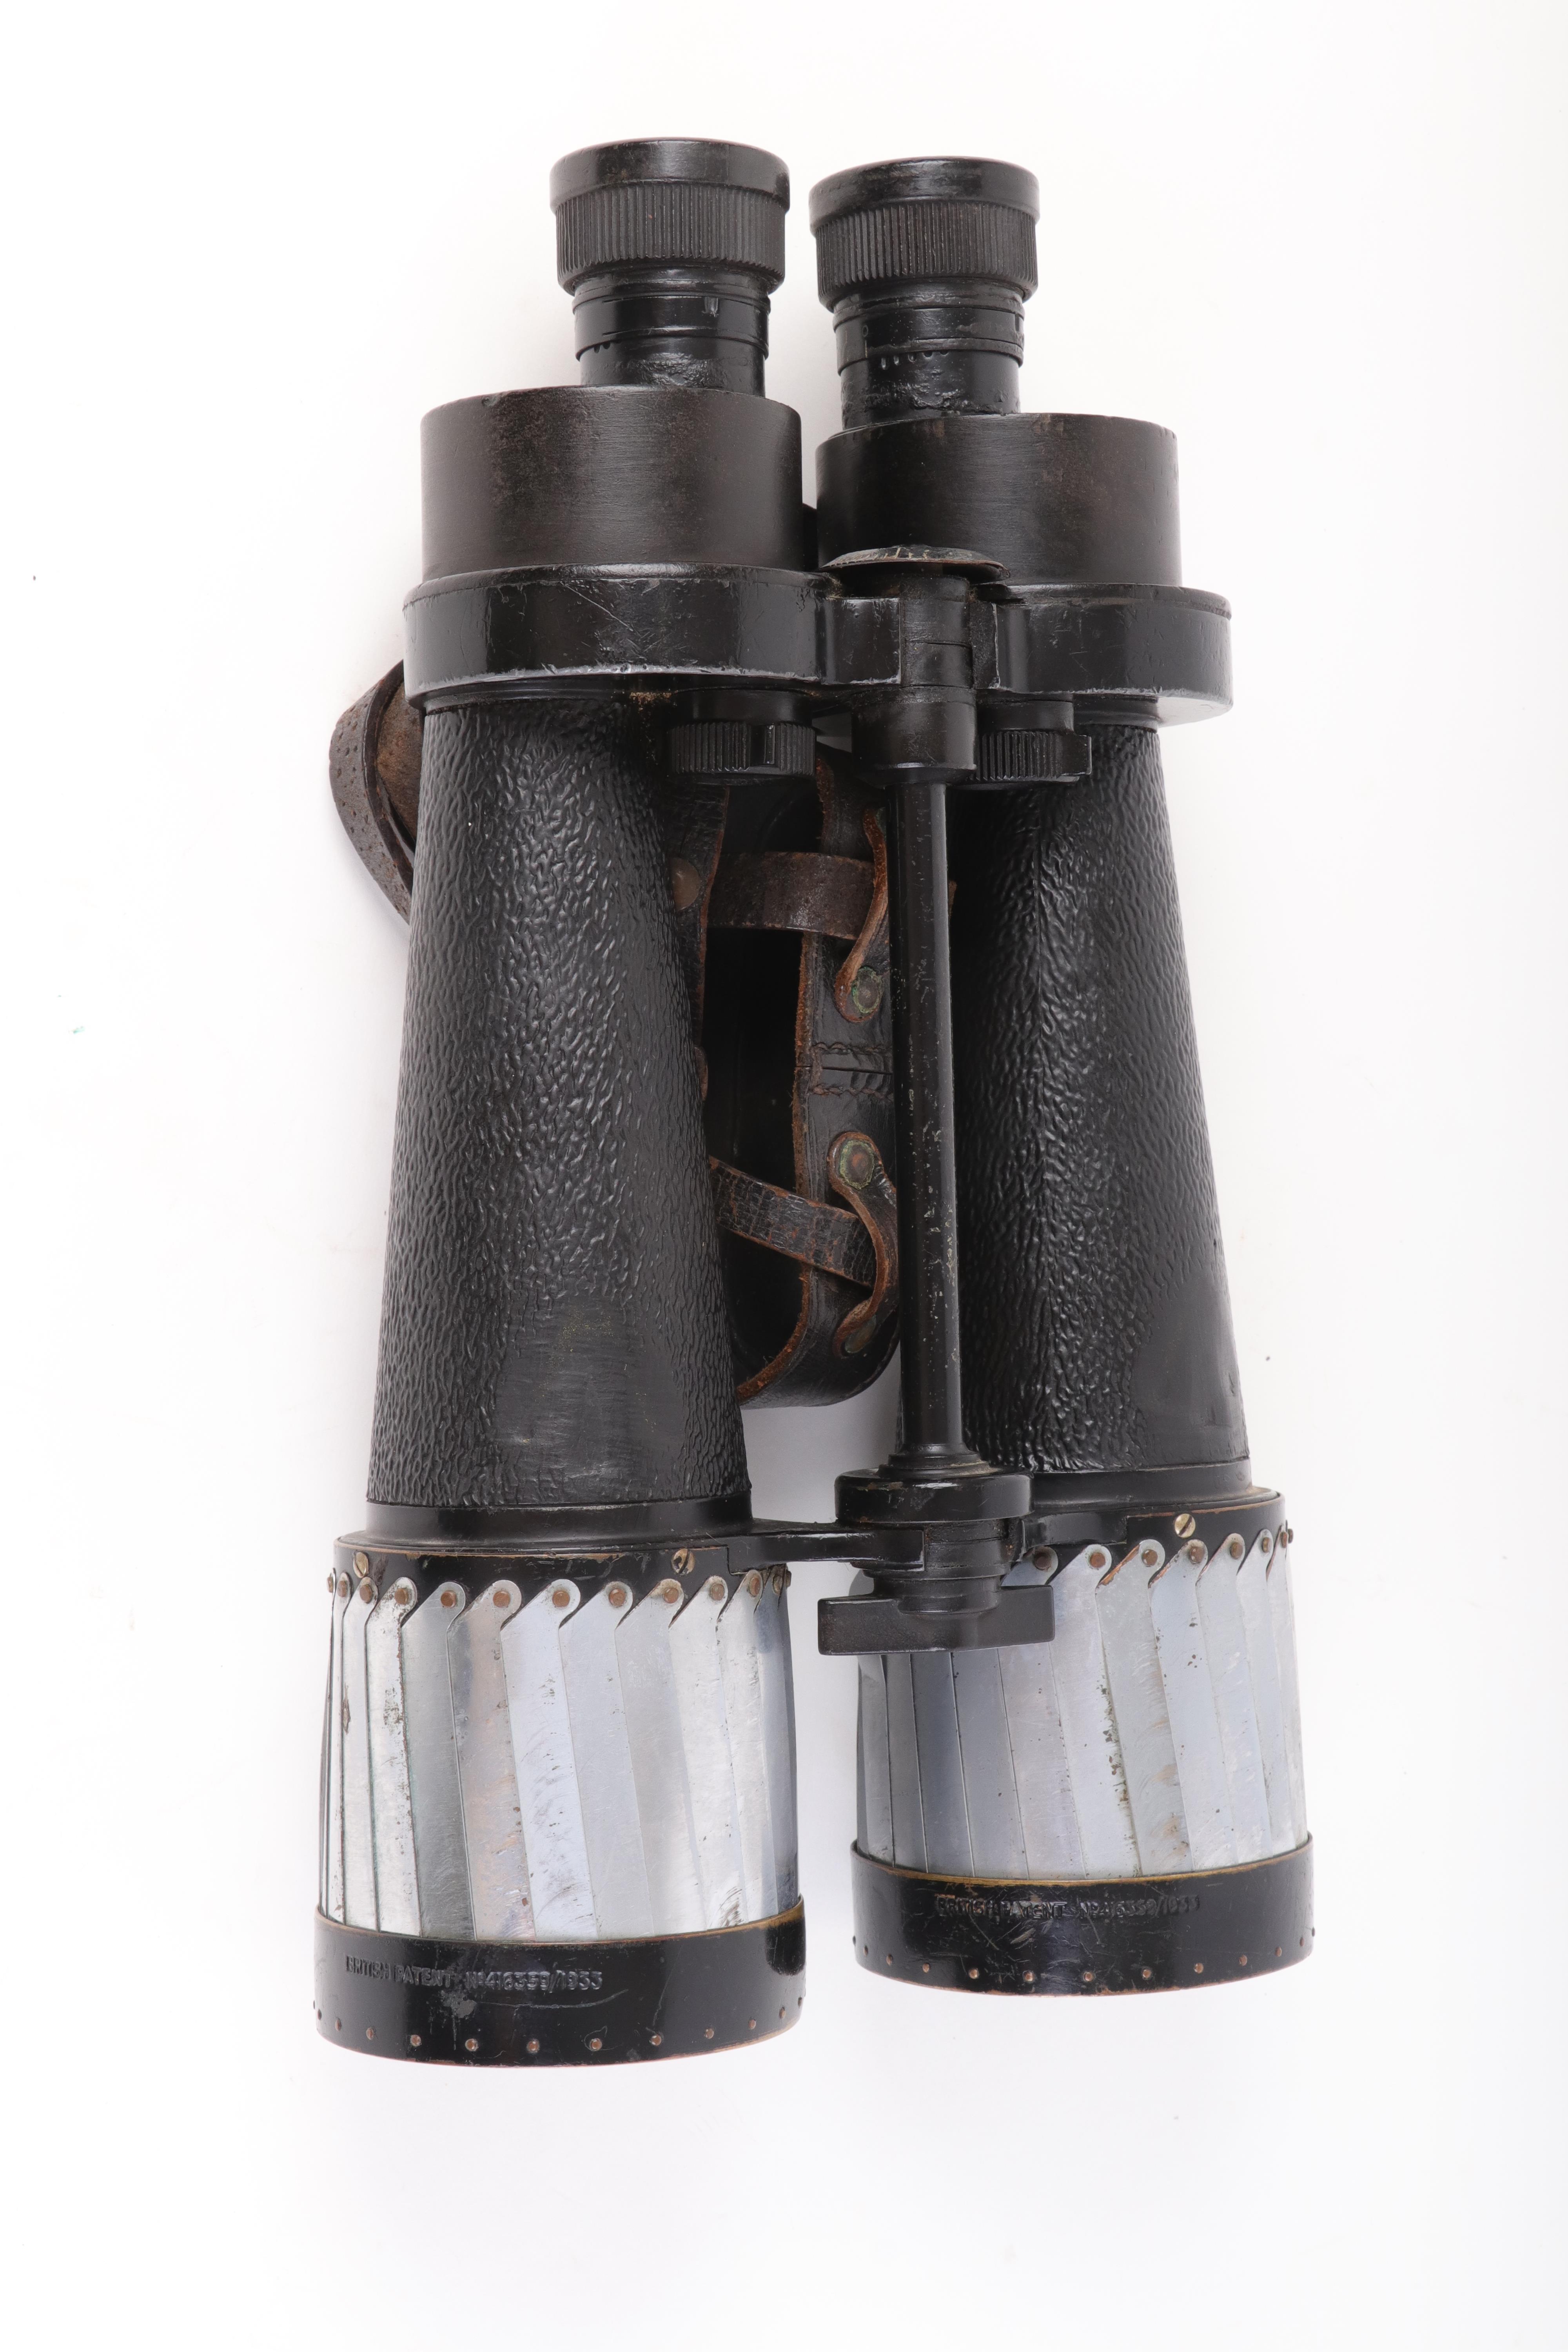 WWII Barr & Stroud C.F.41 7x military binoculars, broad arrow marks, with expanding weather shields